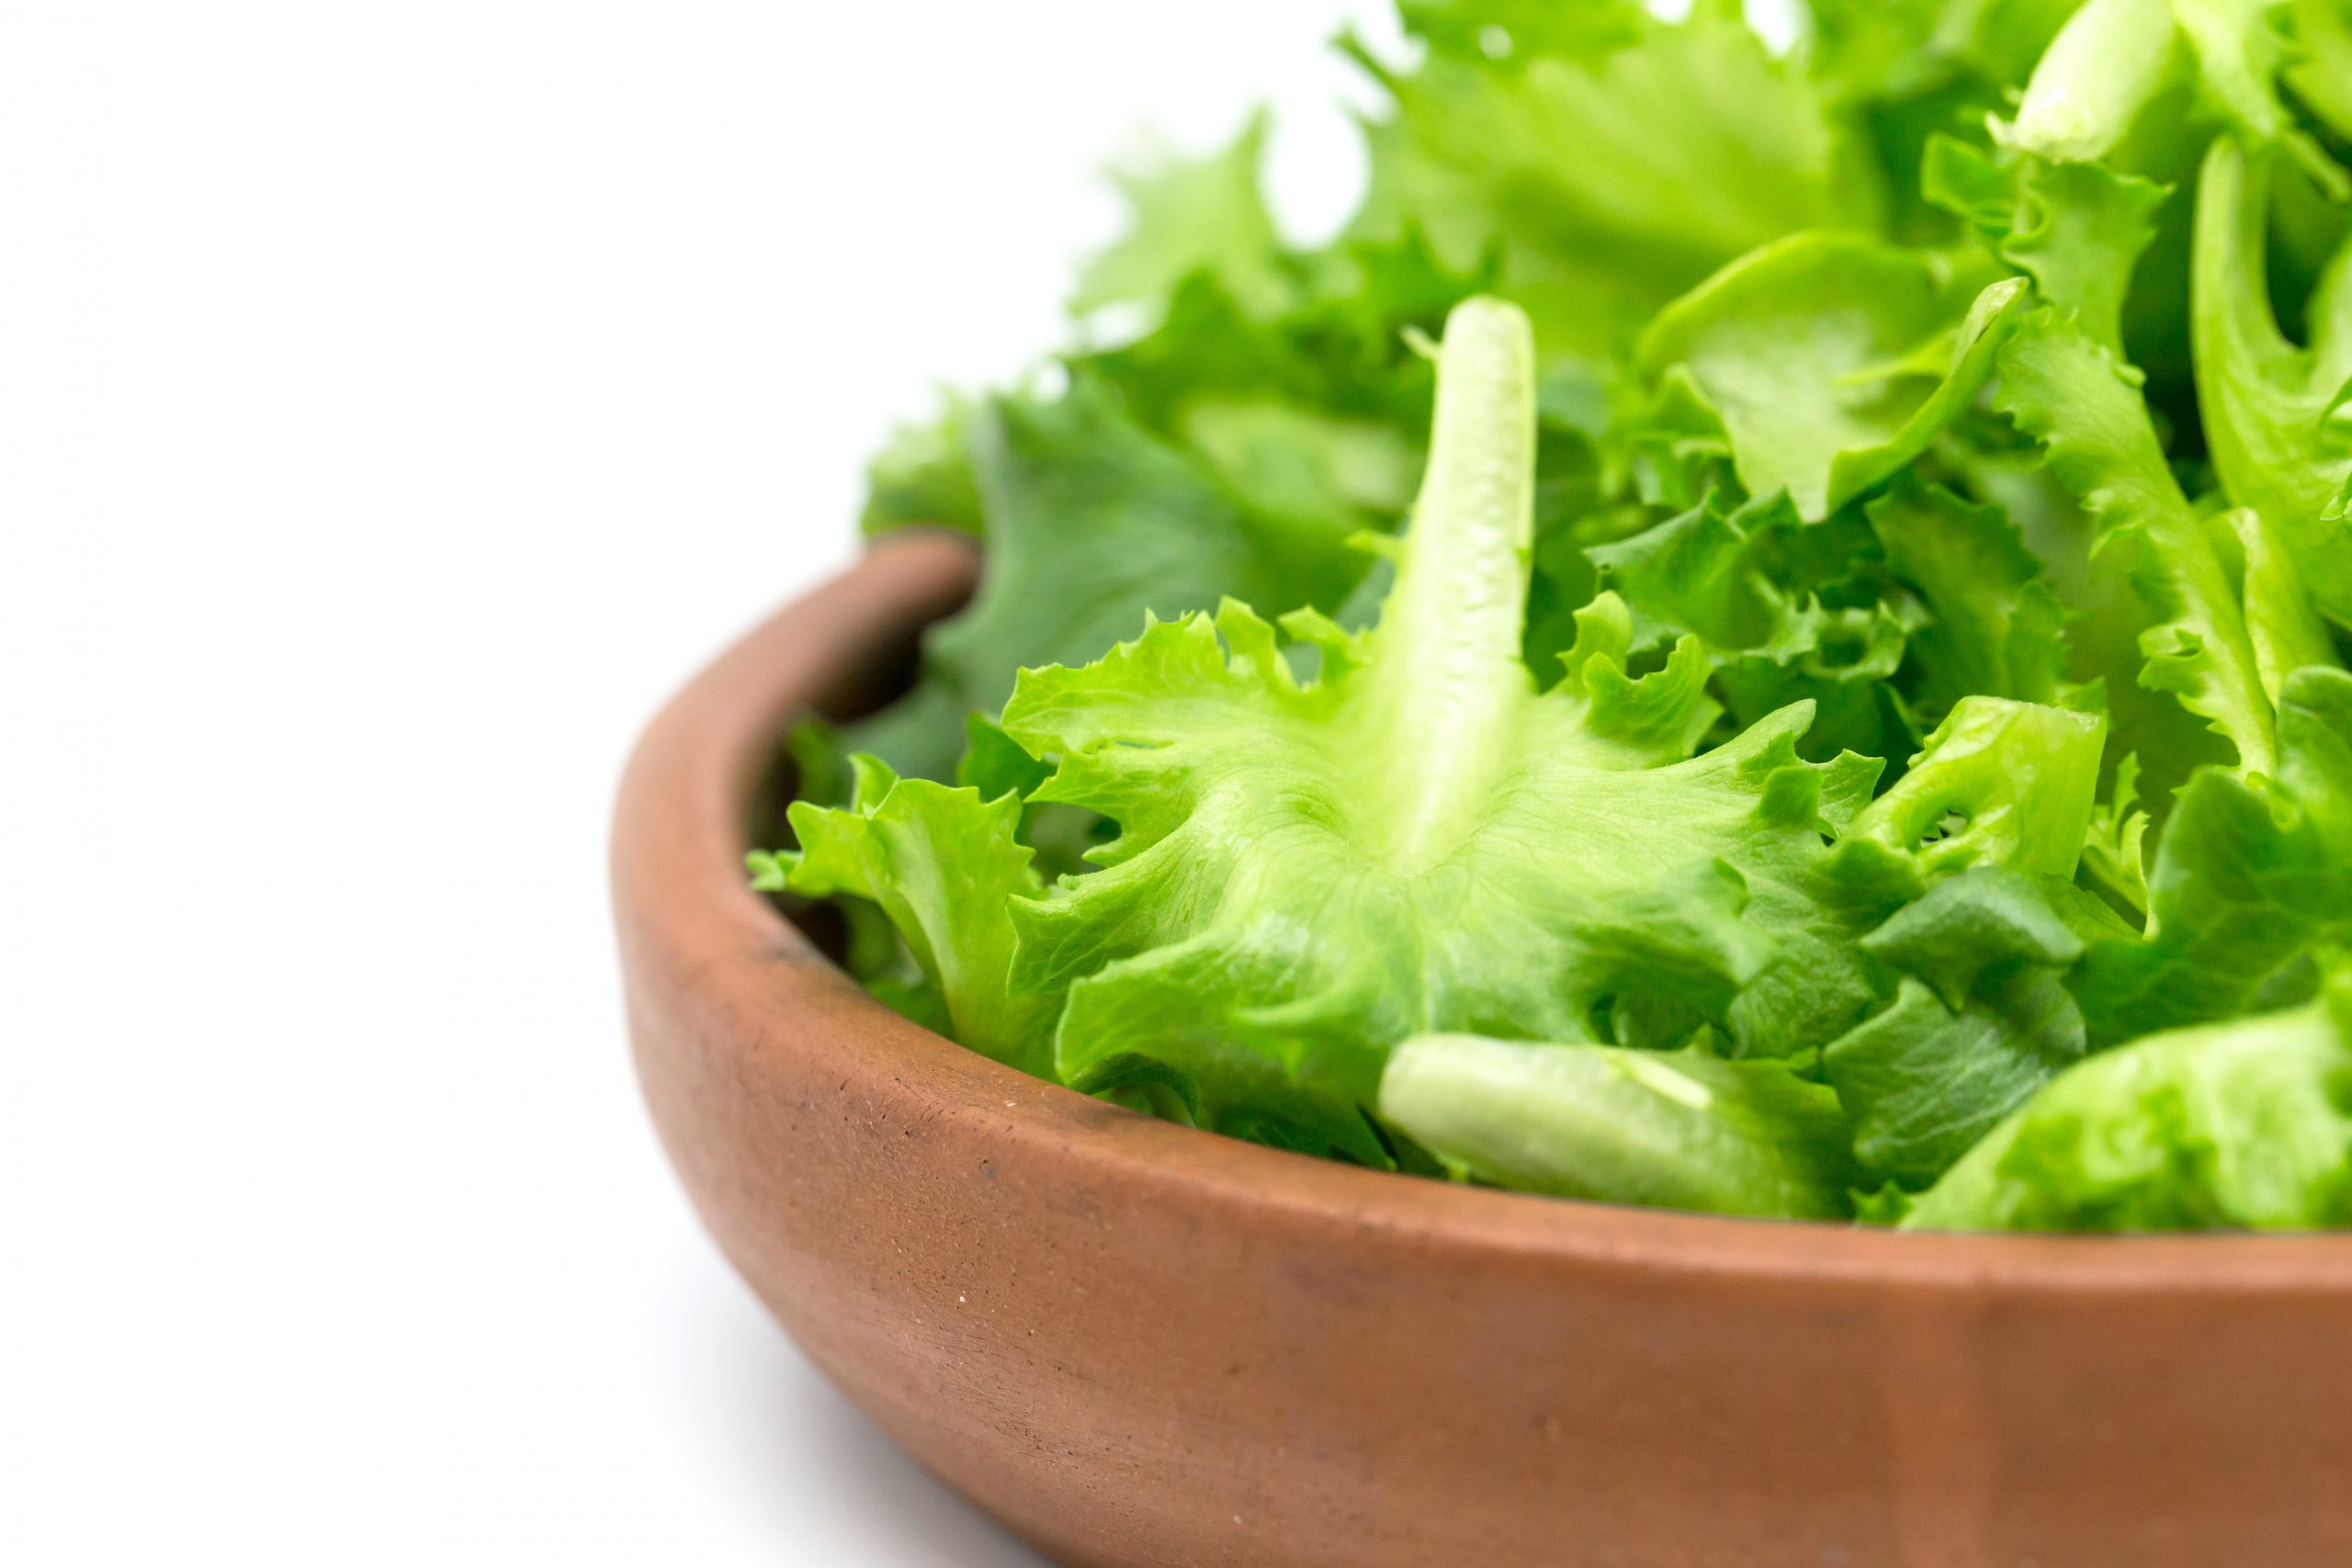 Does Lettuce Grow Underground?